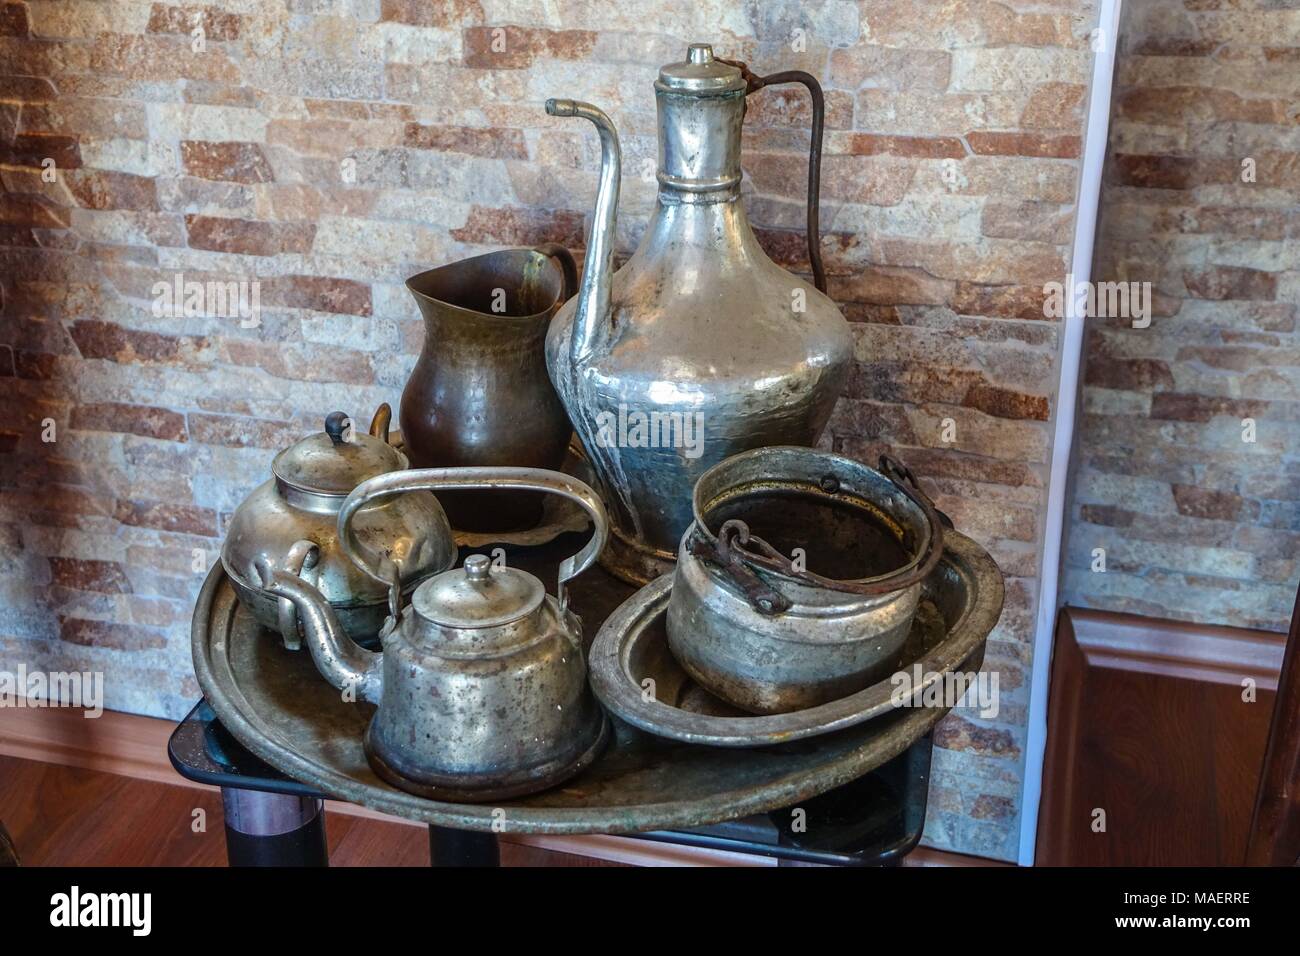 Traditional Turkish tea set Stock Photo by ©Rashevskiy 73172525